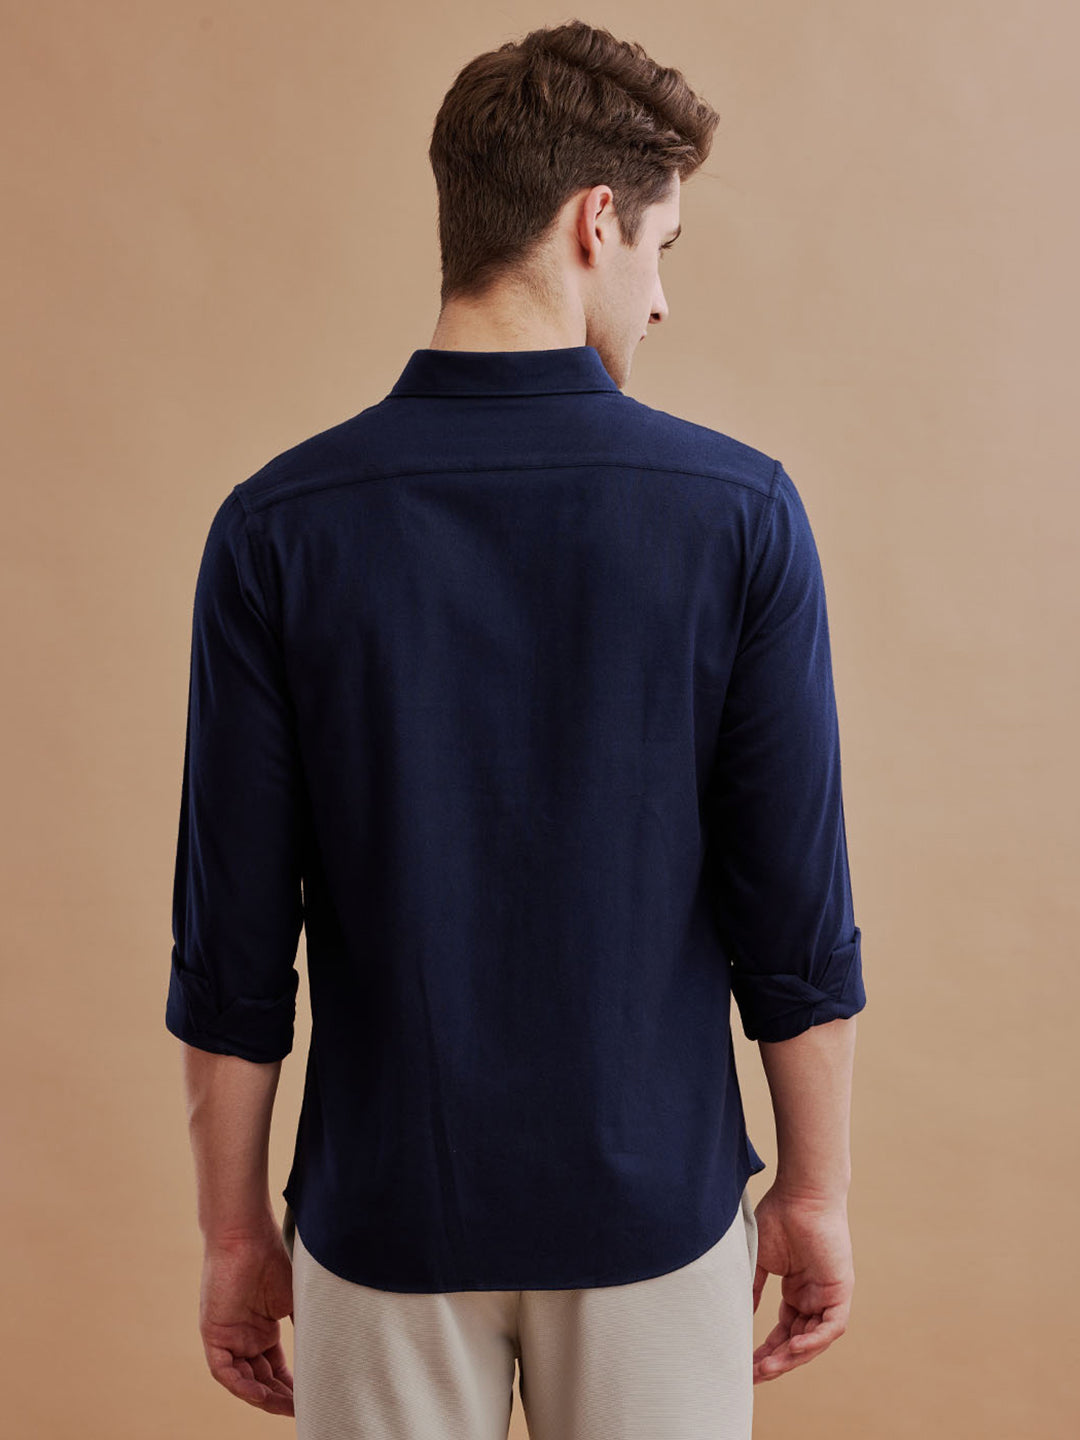 Aldeno Mens Regular Fit Plain Navy Casual Cotton Shirt (TARRA)